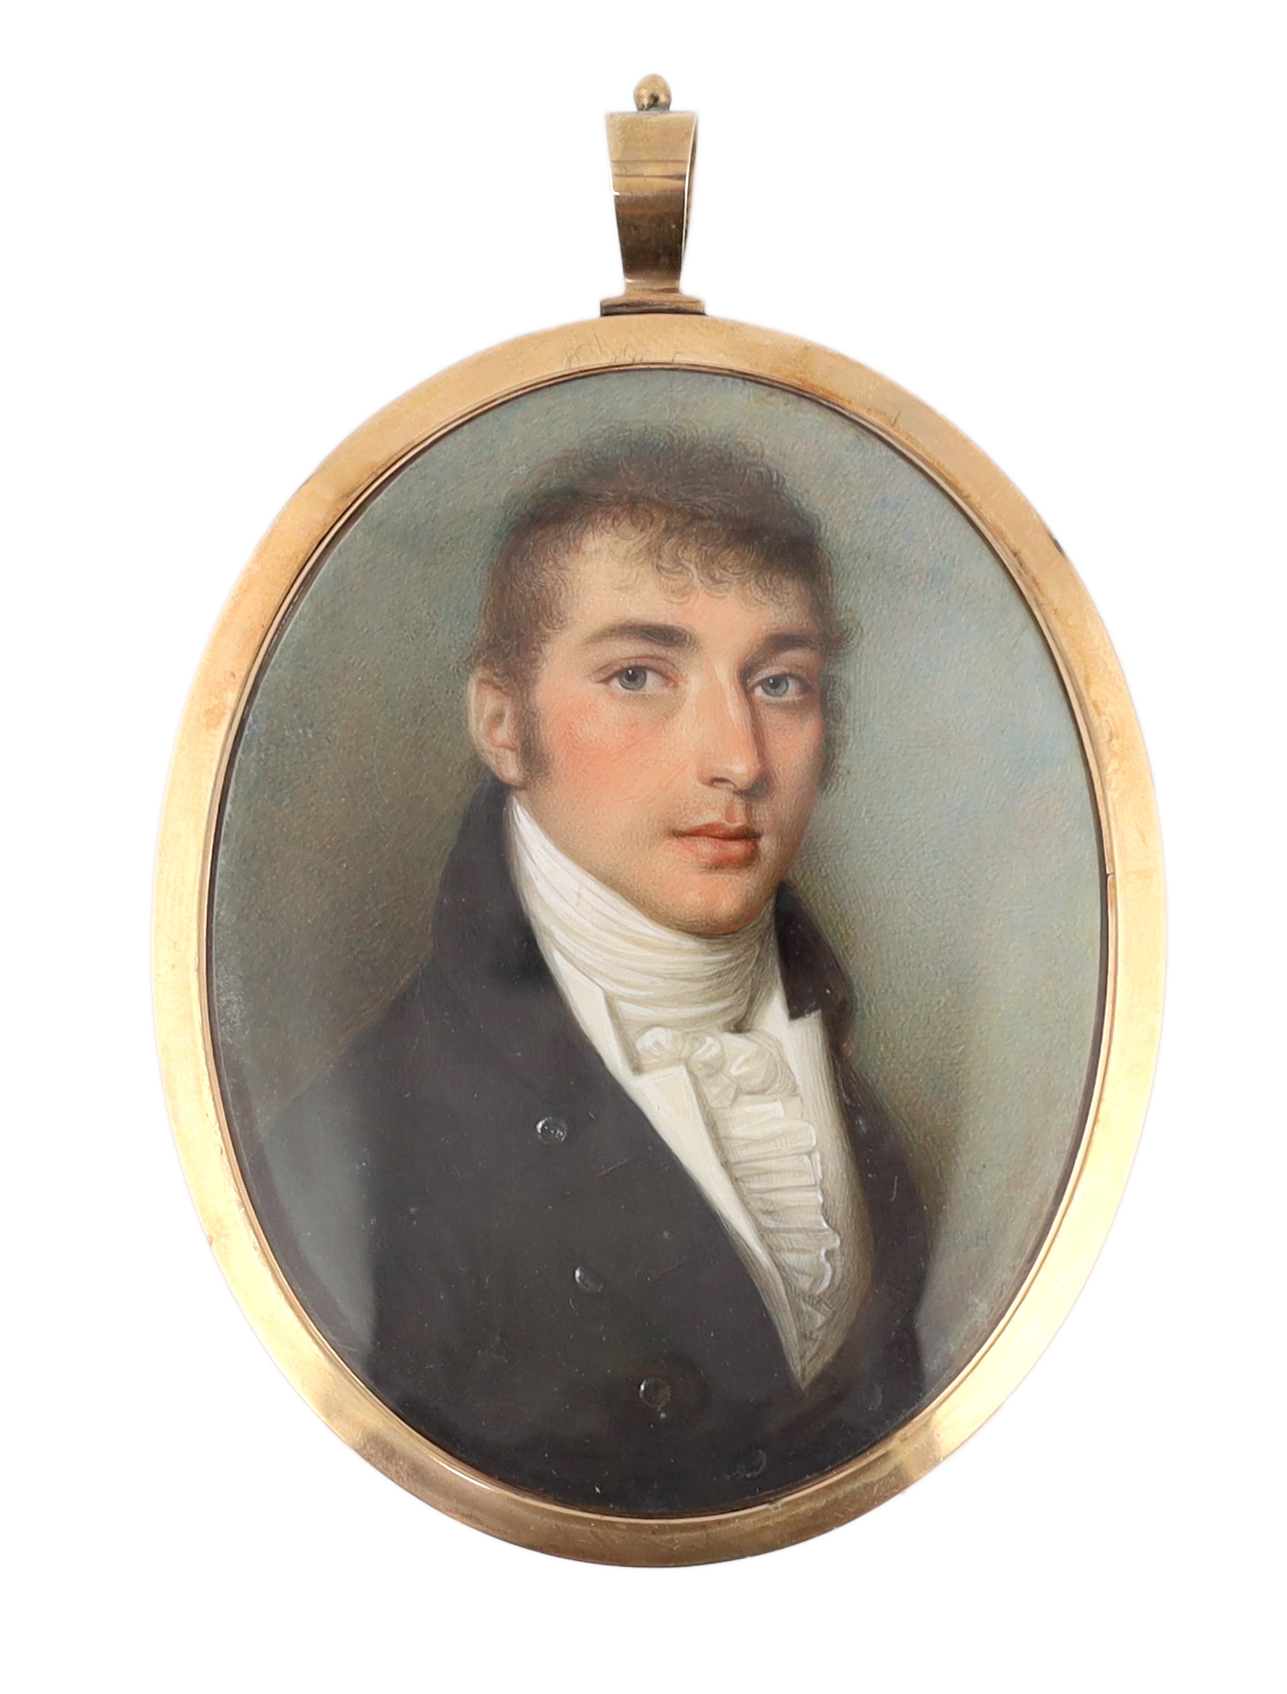 Thomas Hazlehurst (English, 1740-1821), Portrait miniature of a gentleman, watercolour on ivory, 7.4 x 5.7cm. CITES Submission reference 4A88H1R5